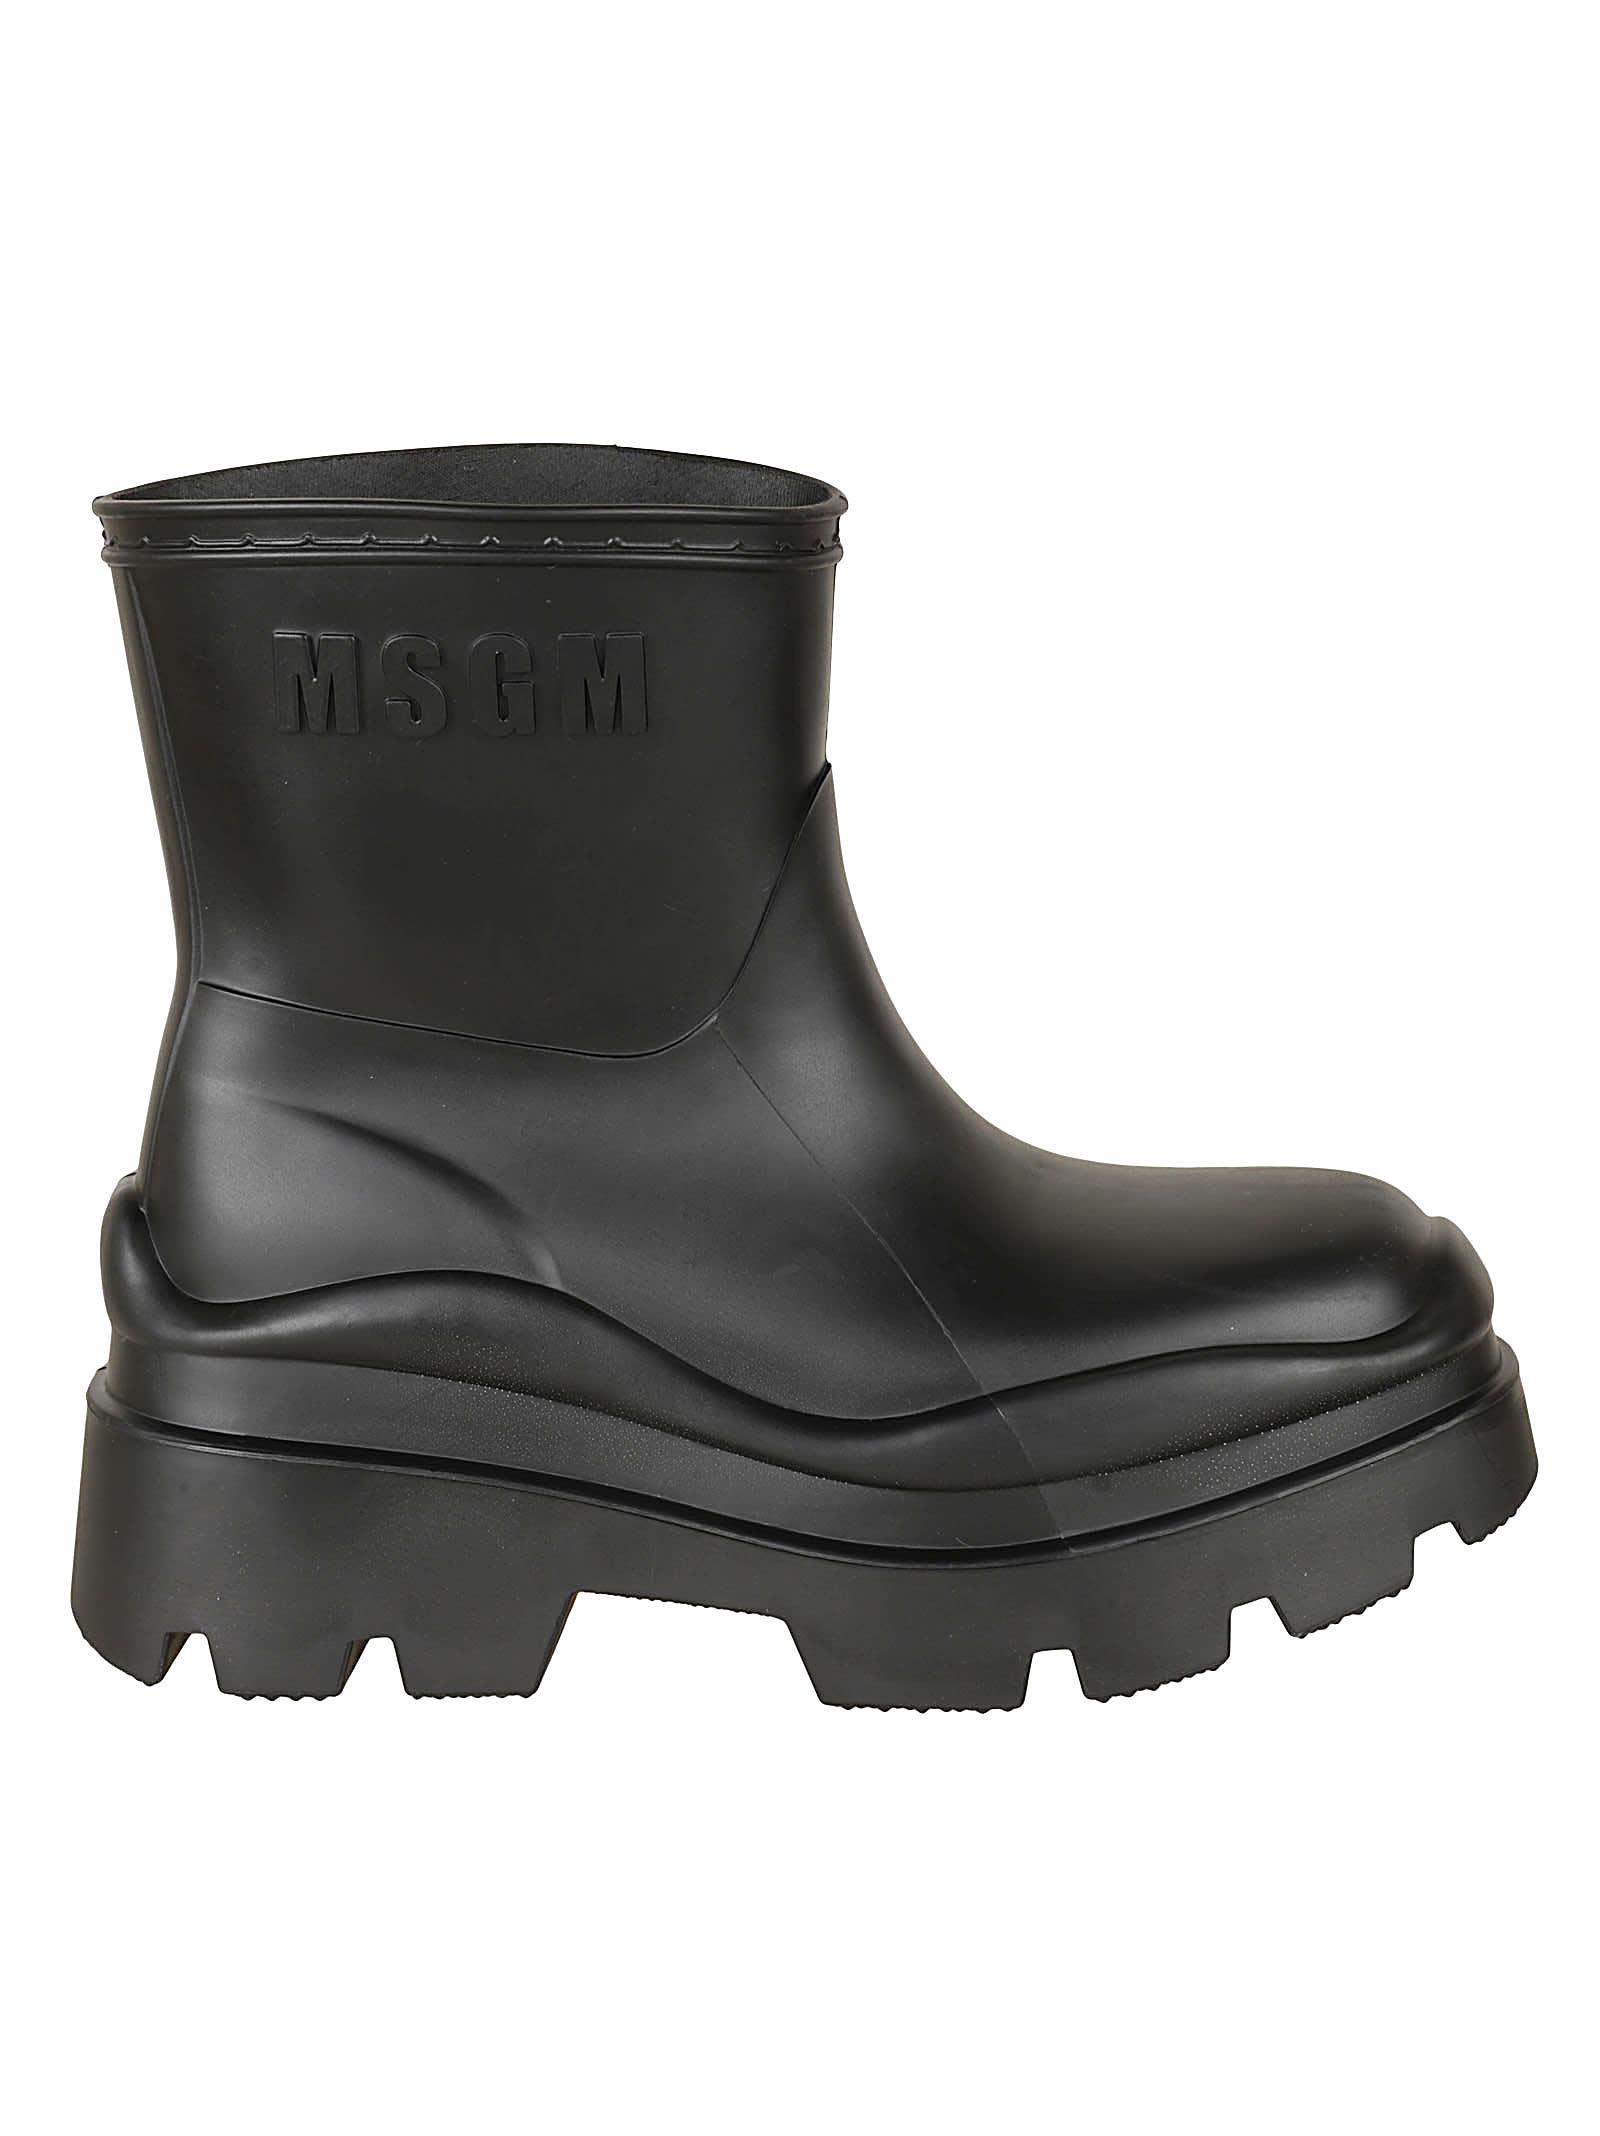 MSGM Logo Embossed Rain Boots in Black | Lyst